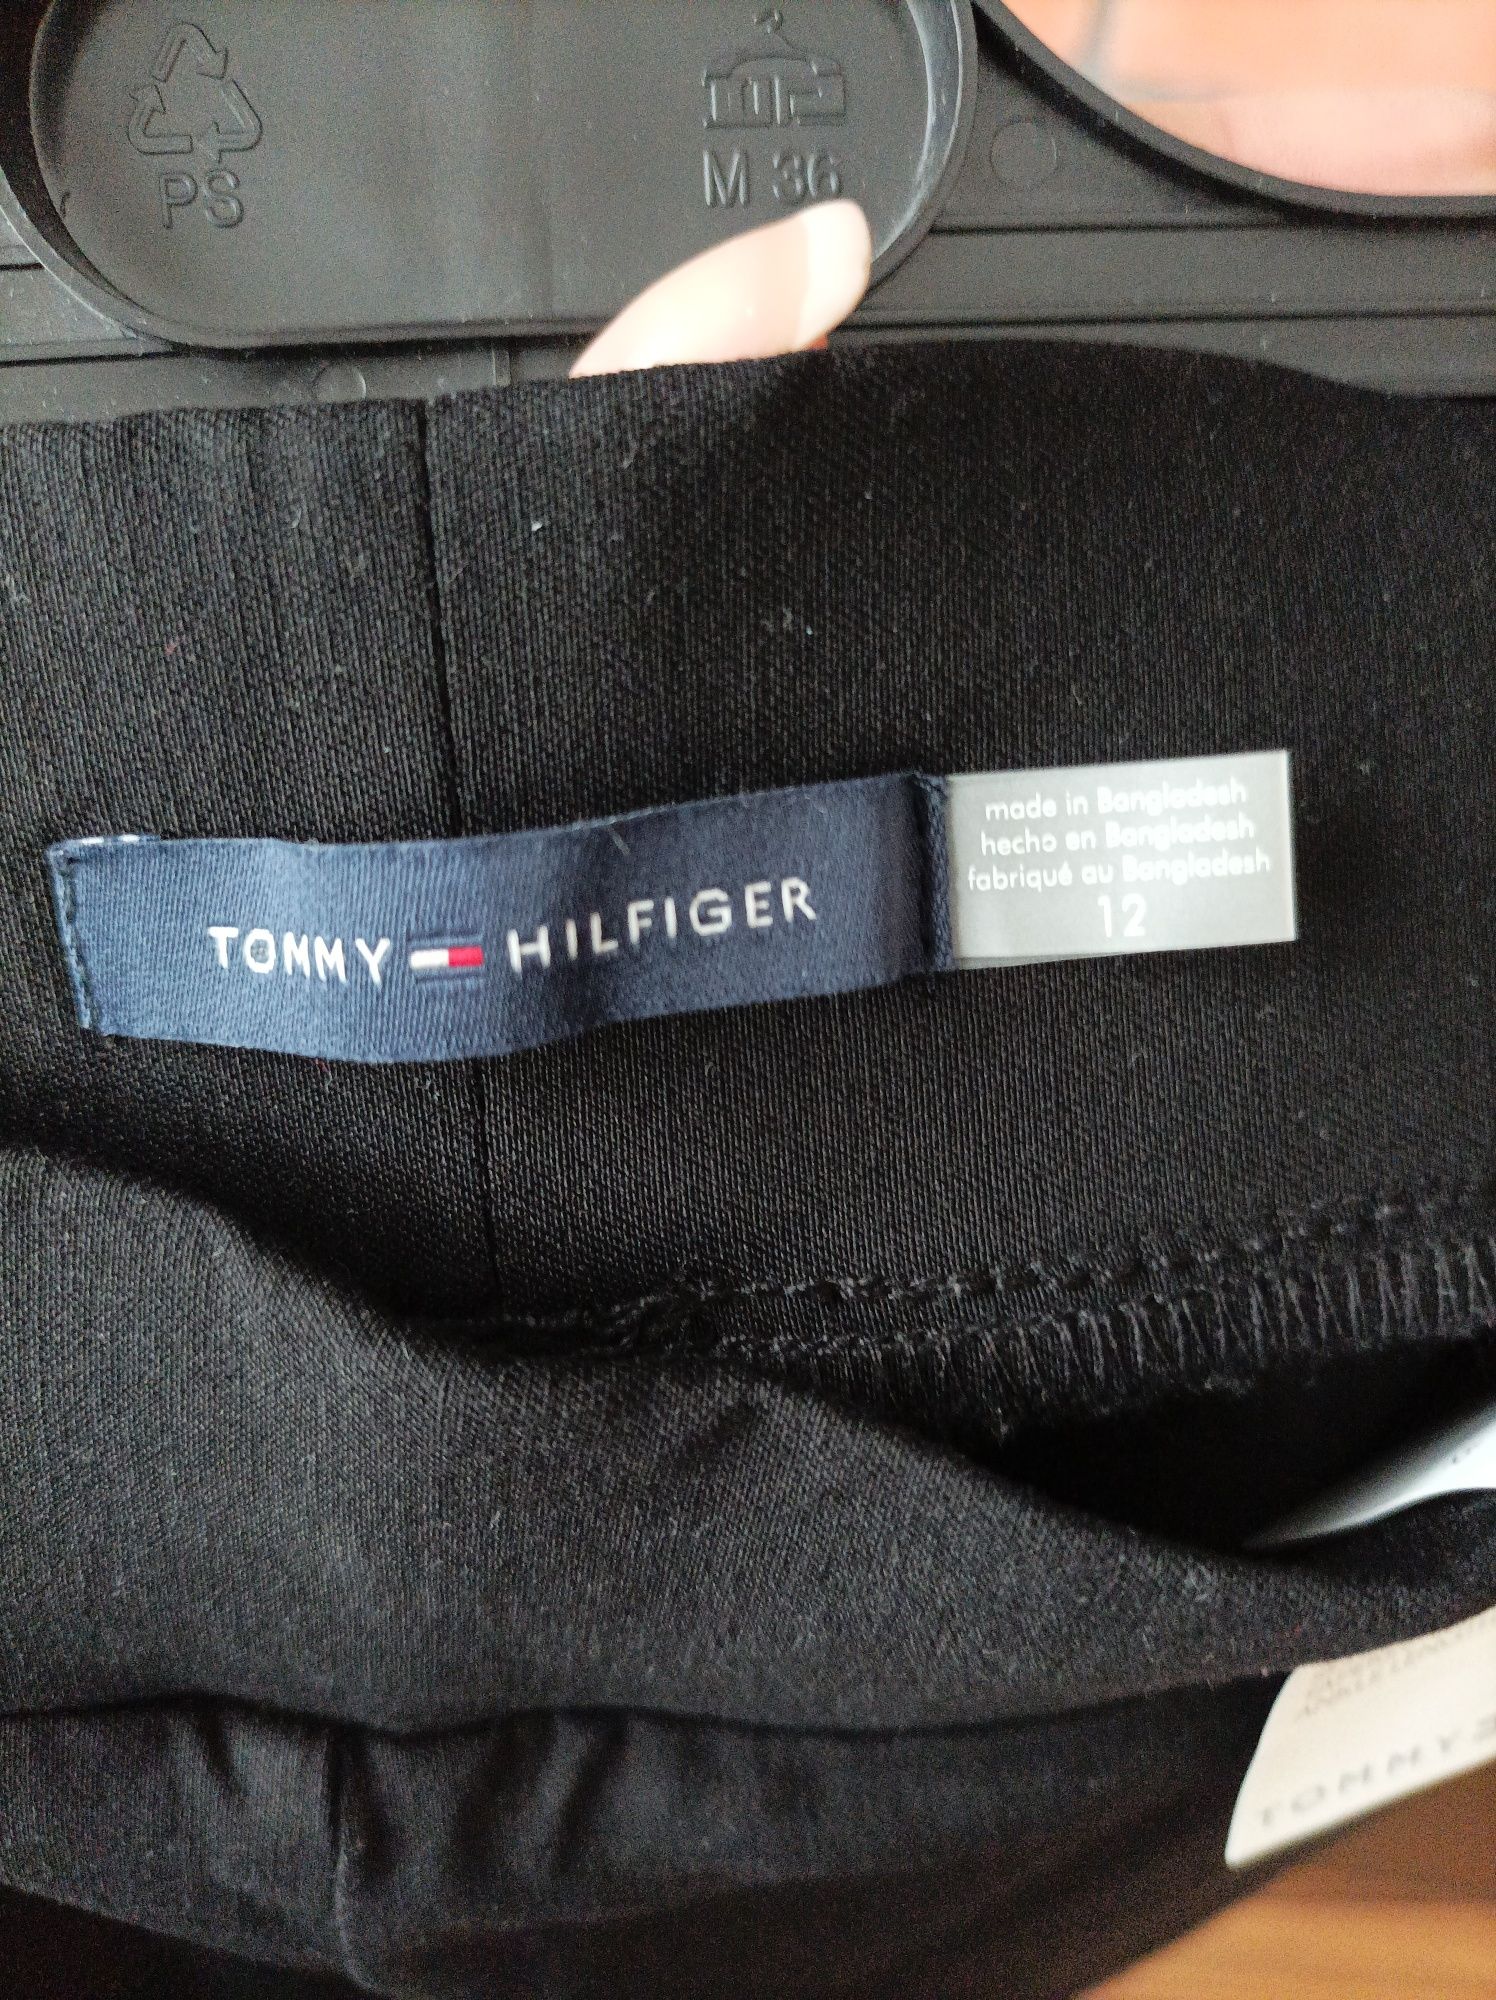 Oryginalne spodnie Tommy Hilfiger